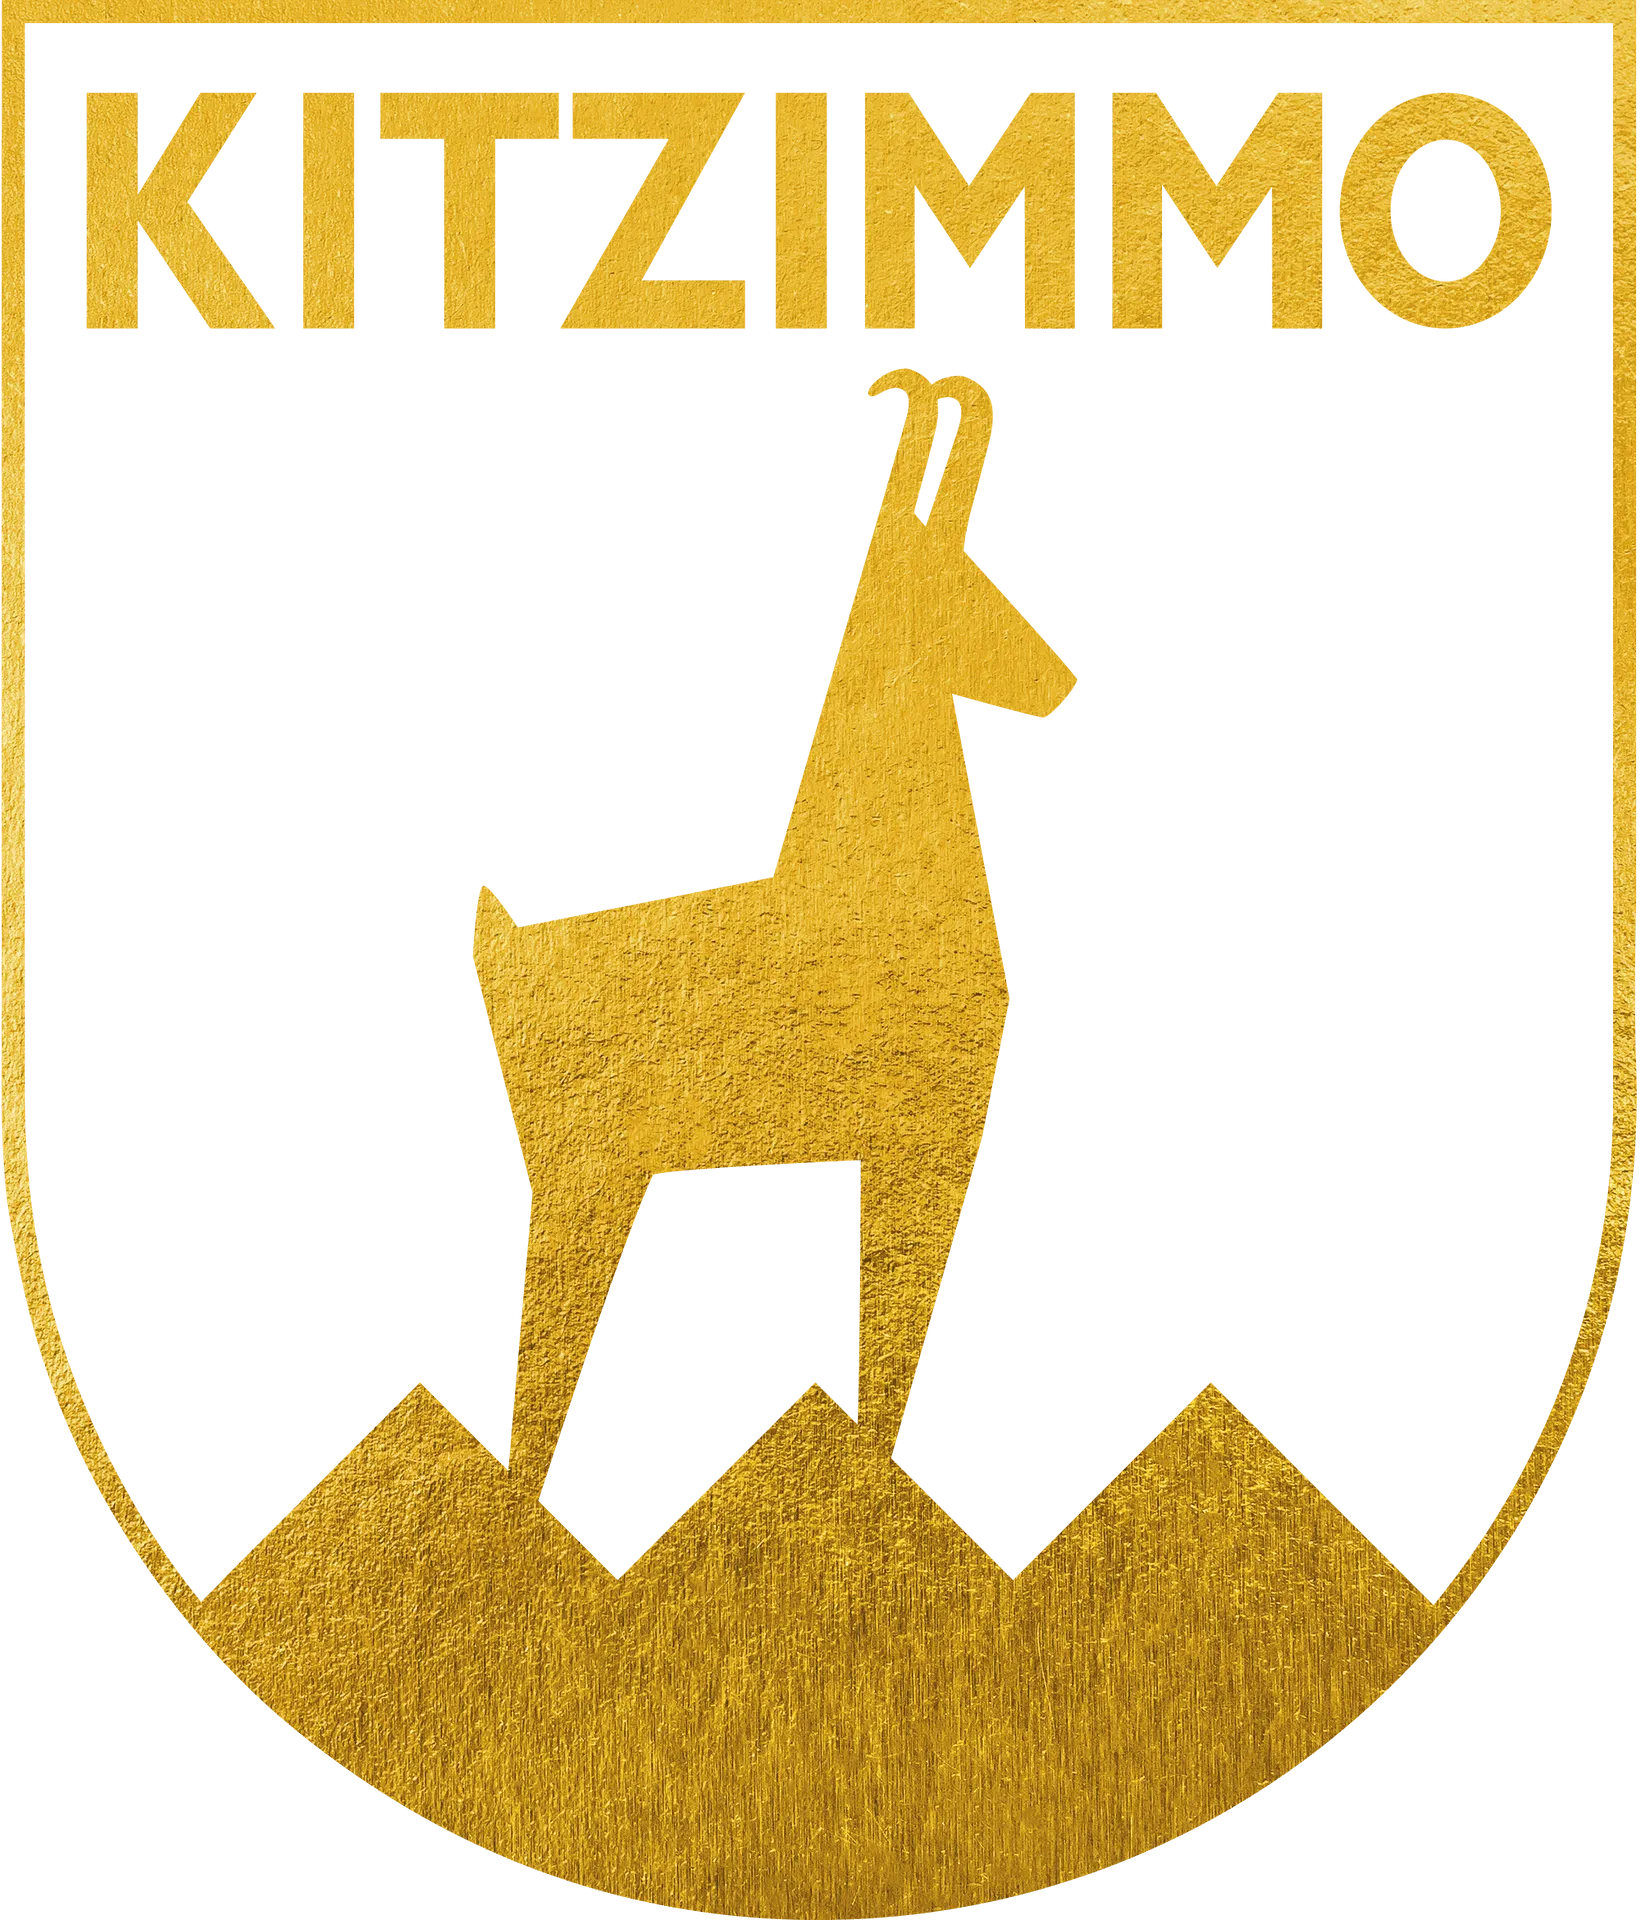 Makler KITZIMMO logo